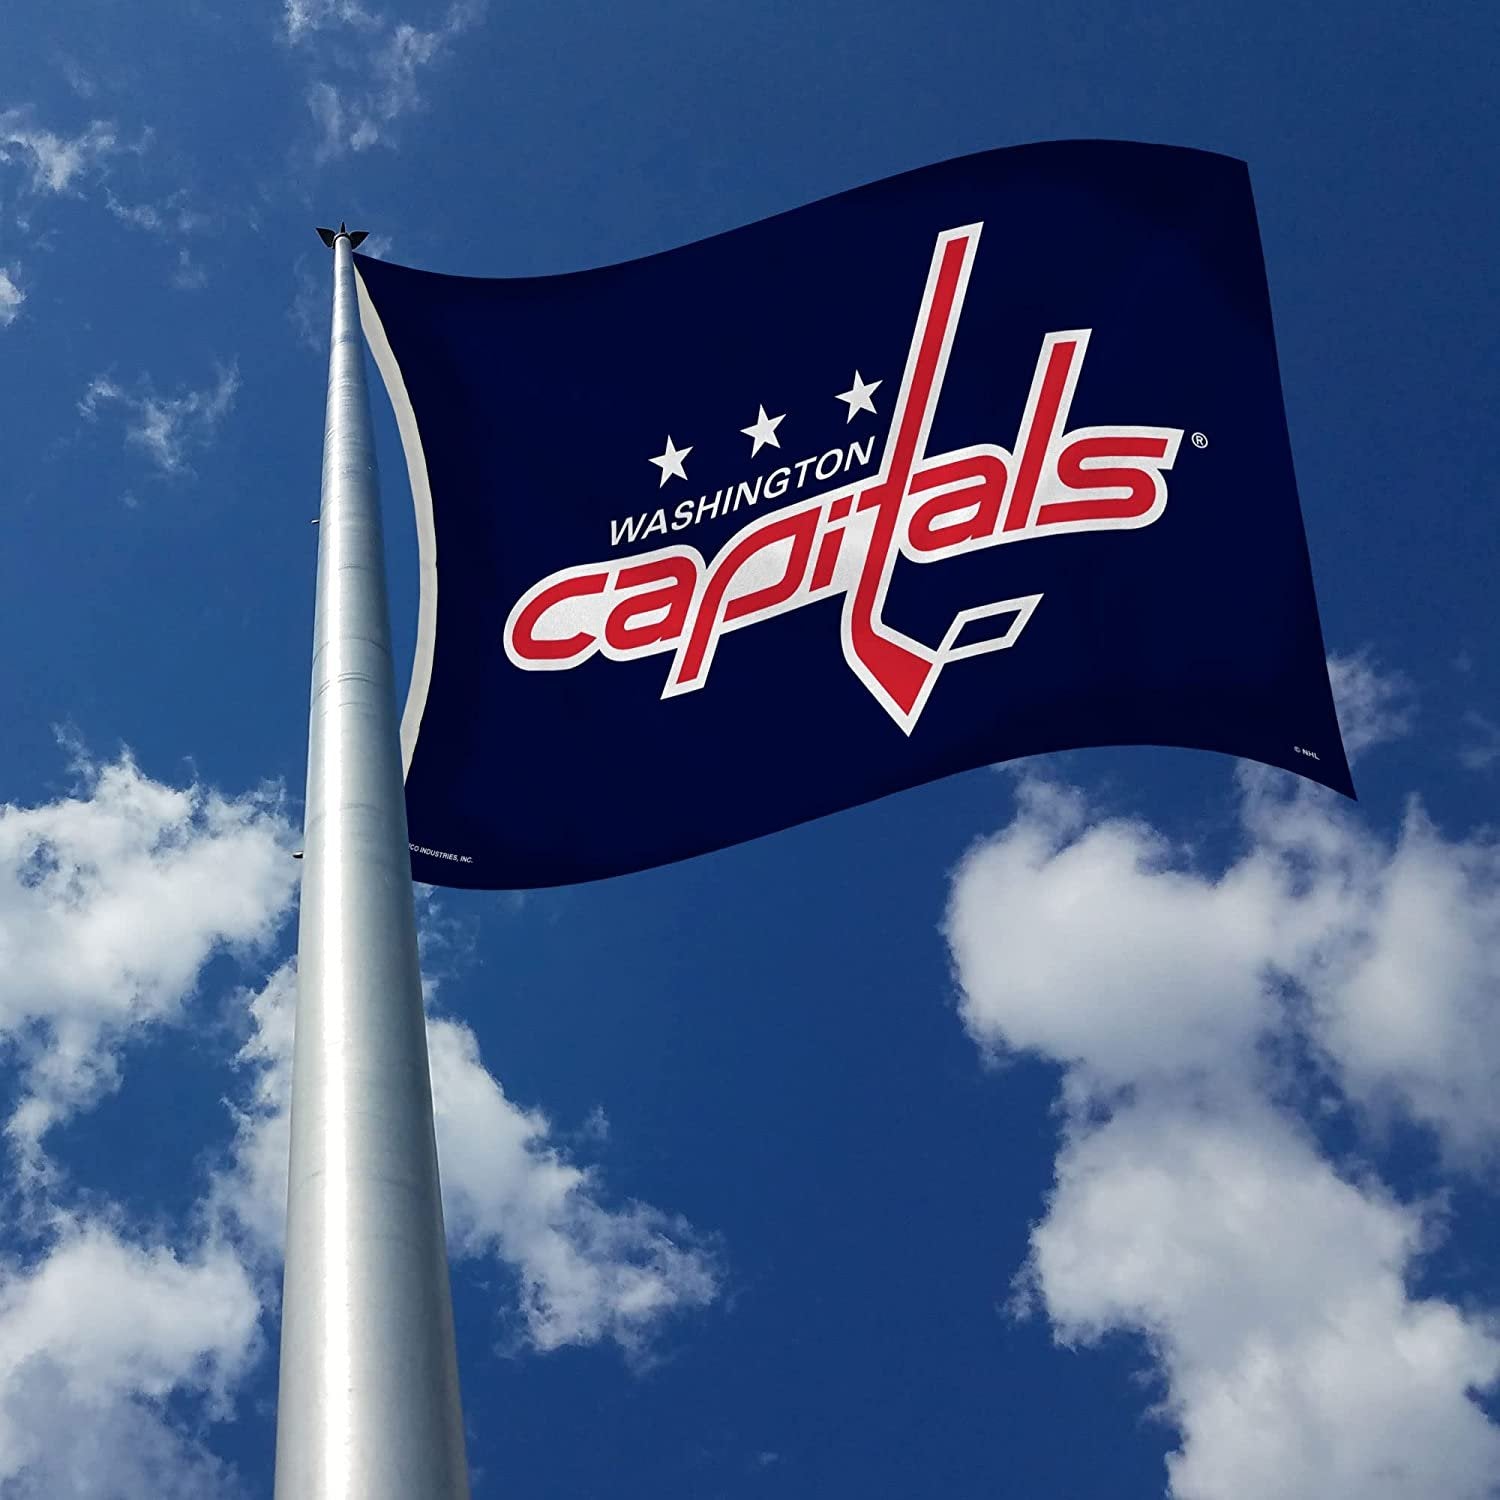 Washington Capitals 3x5 Feet Premium Flag Banner with Metal Grommets Outdoor